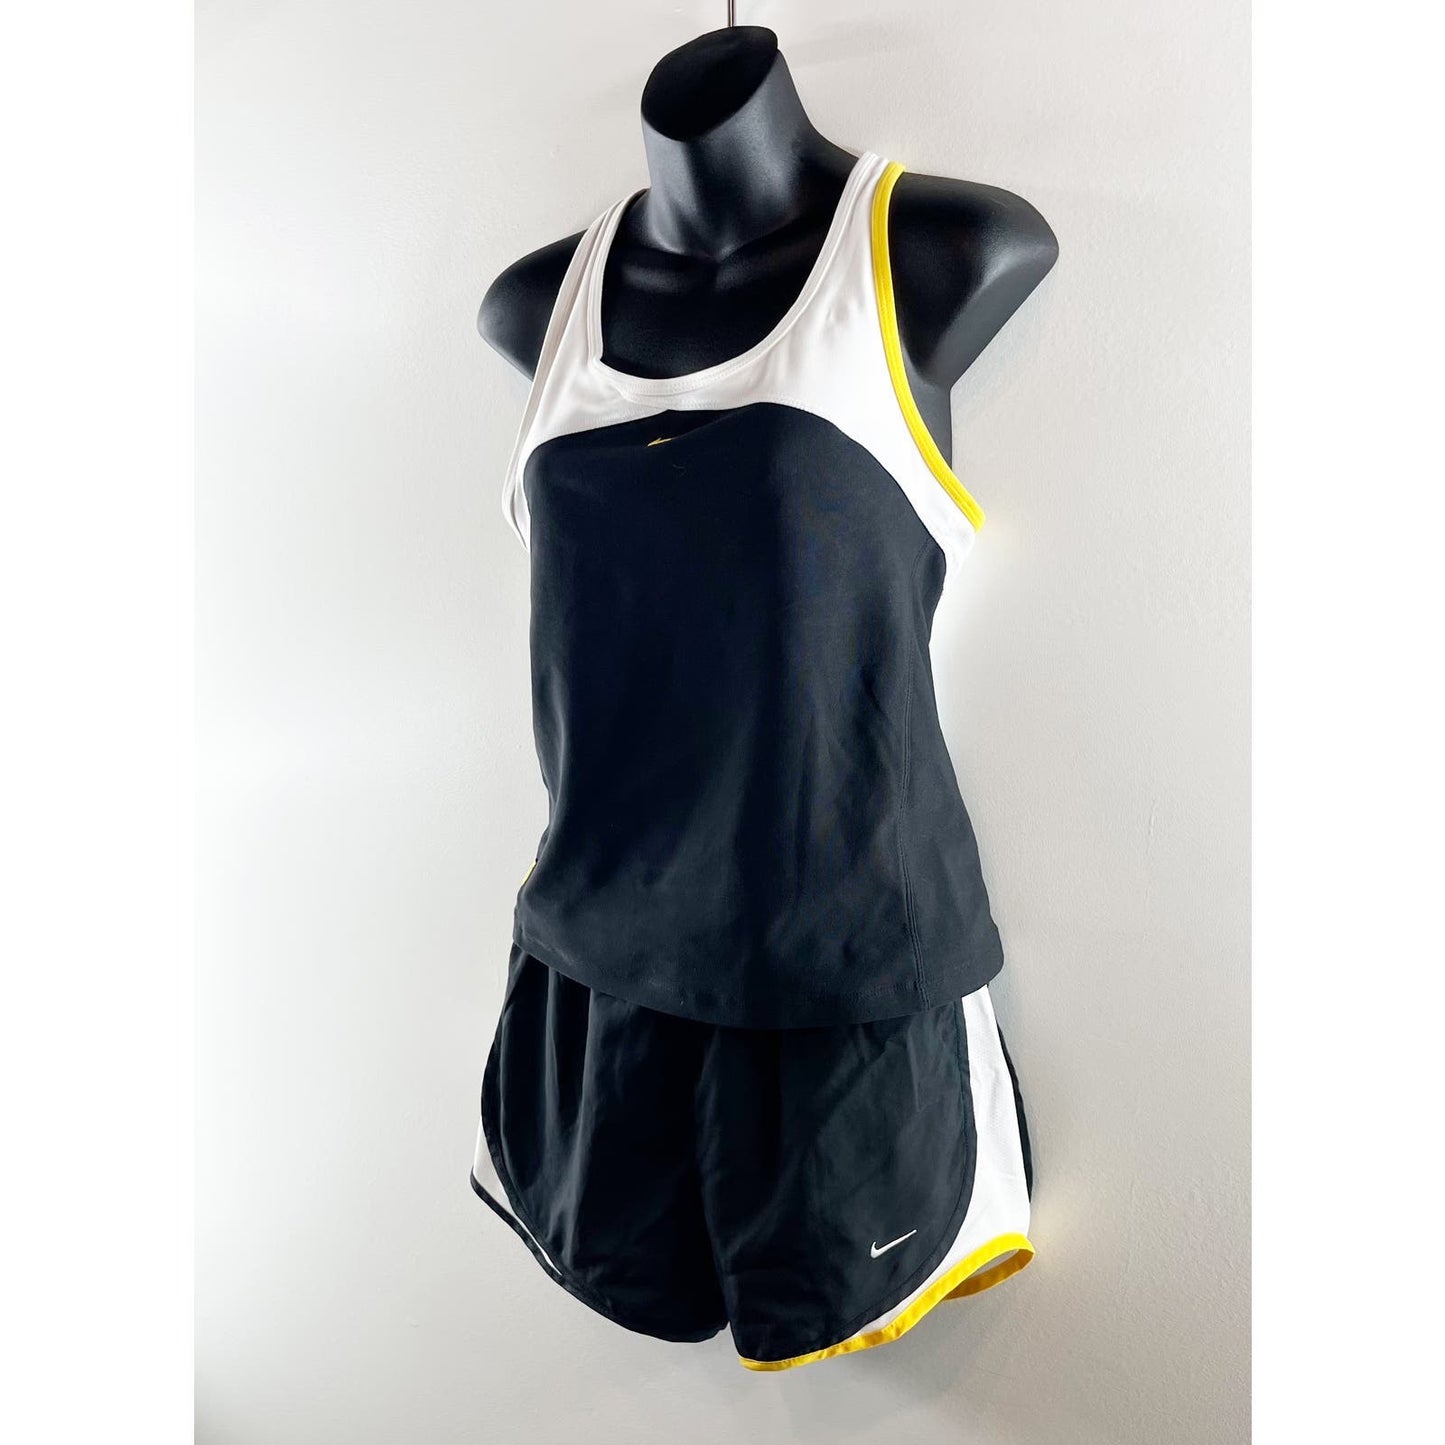 Nike Tank Top and Dri Fit Running Shorts Matching Set Black Yellow White Small